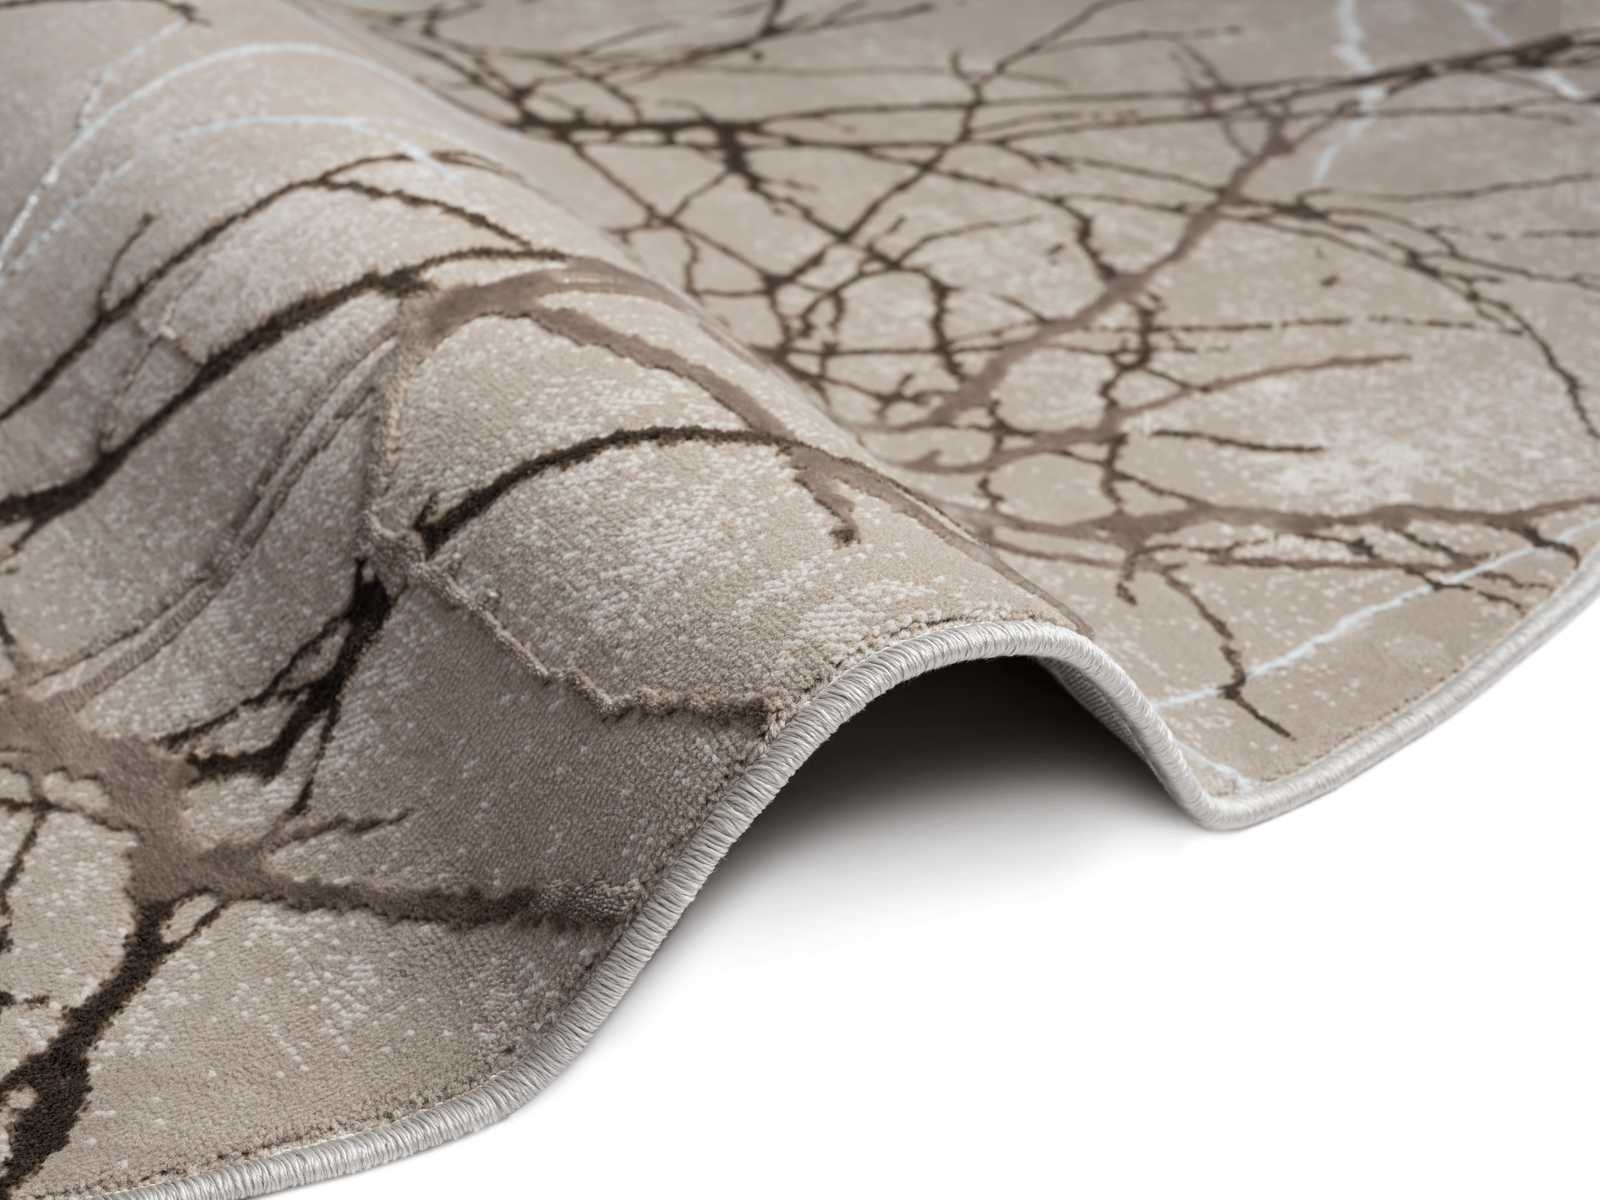             Pile carpet in soft beige - 200 x 140 cm
        